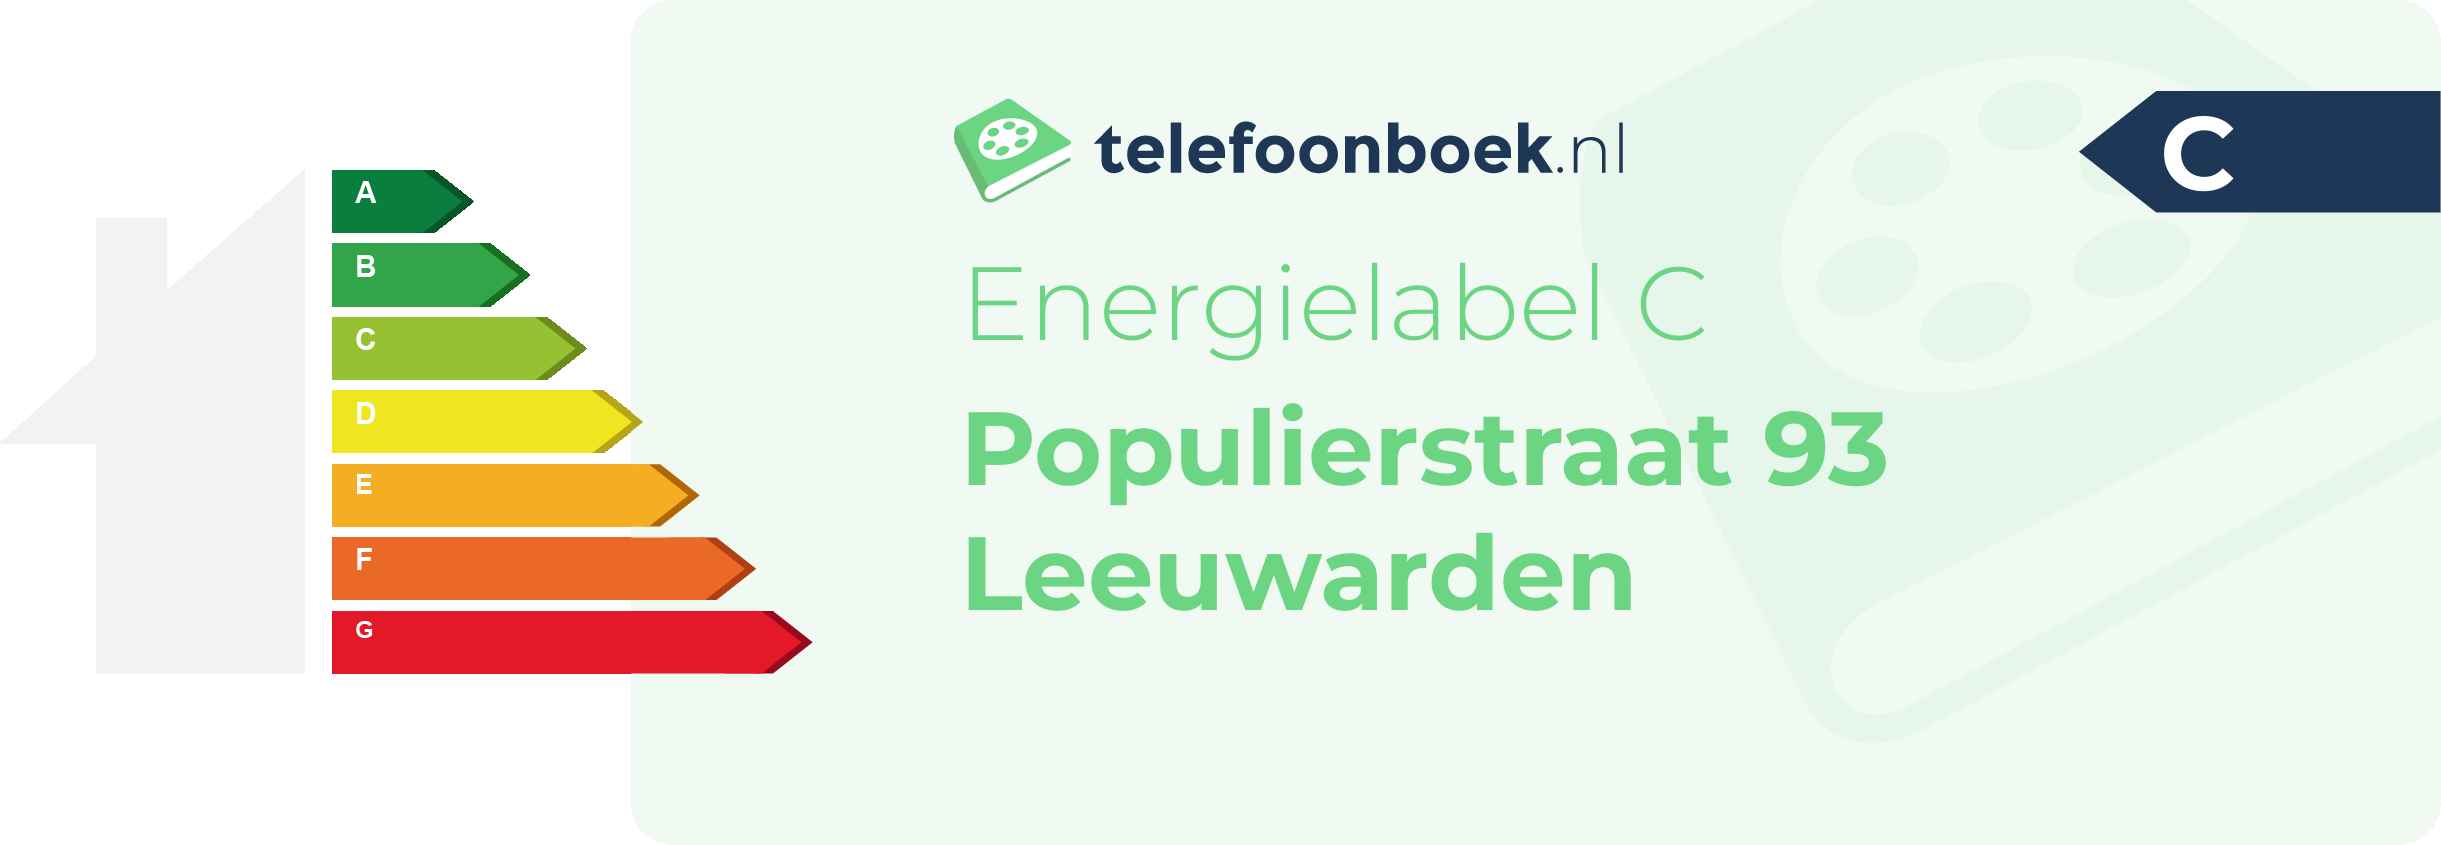 Energielabel Populierstraat 93 Leeuwarden